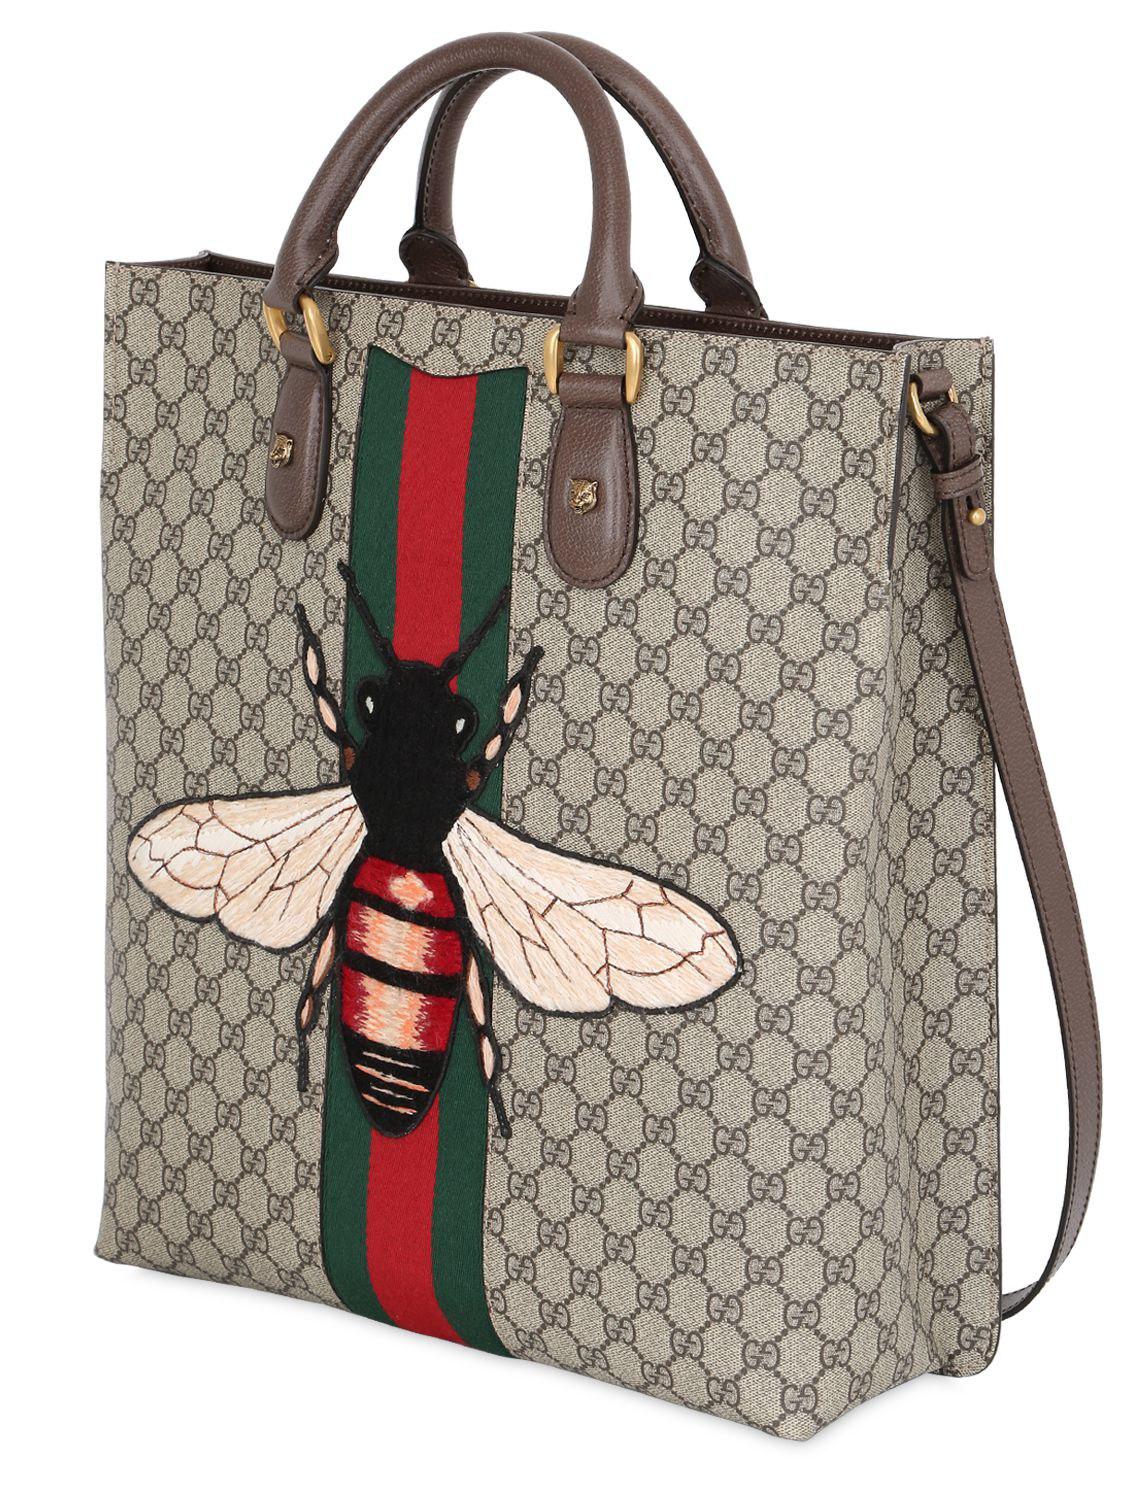 gucci handbag with bee